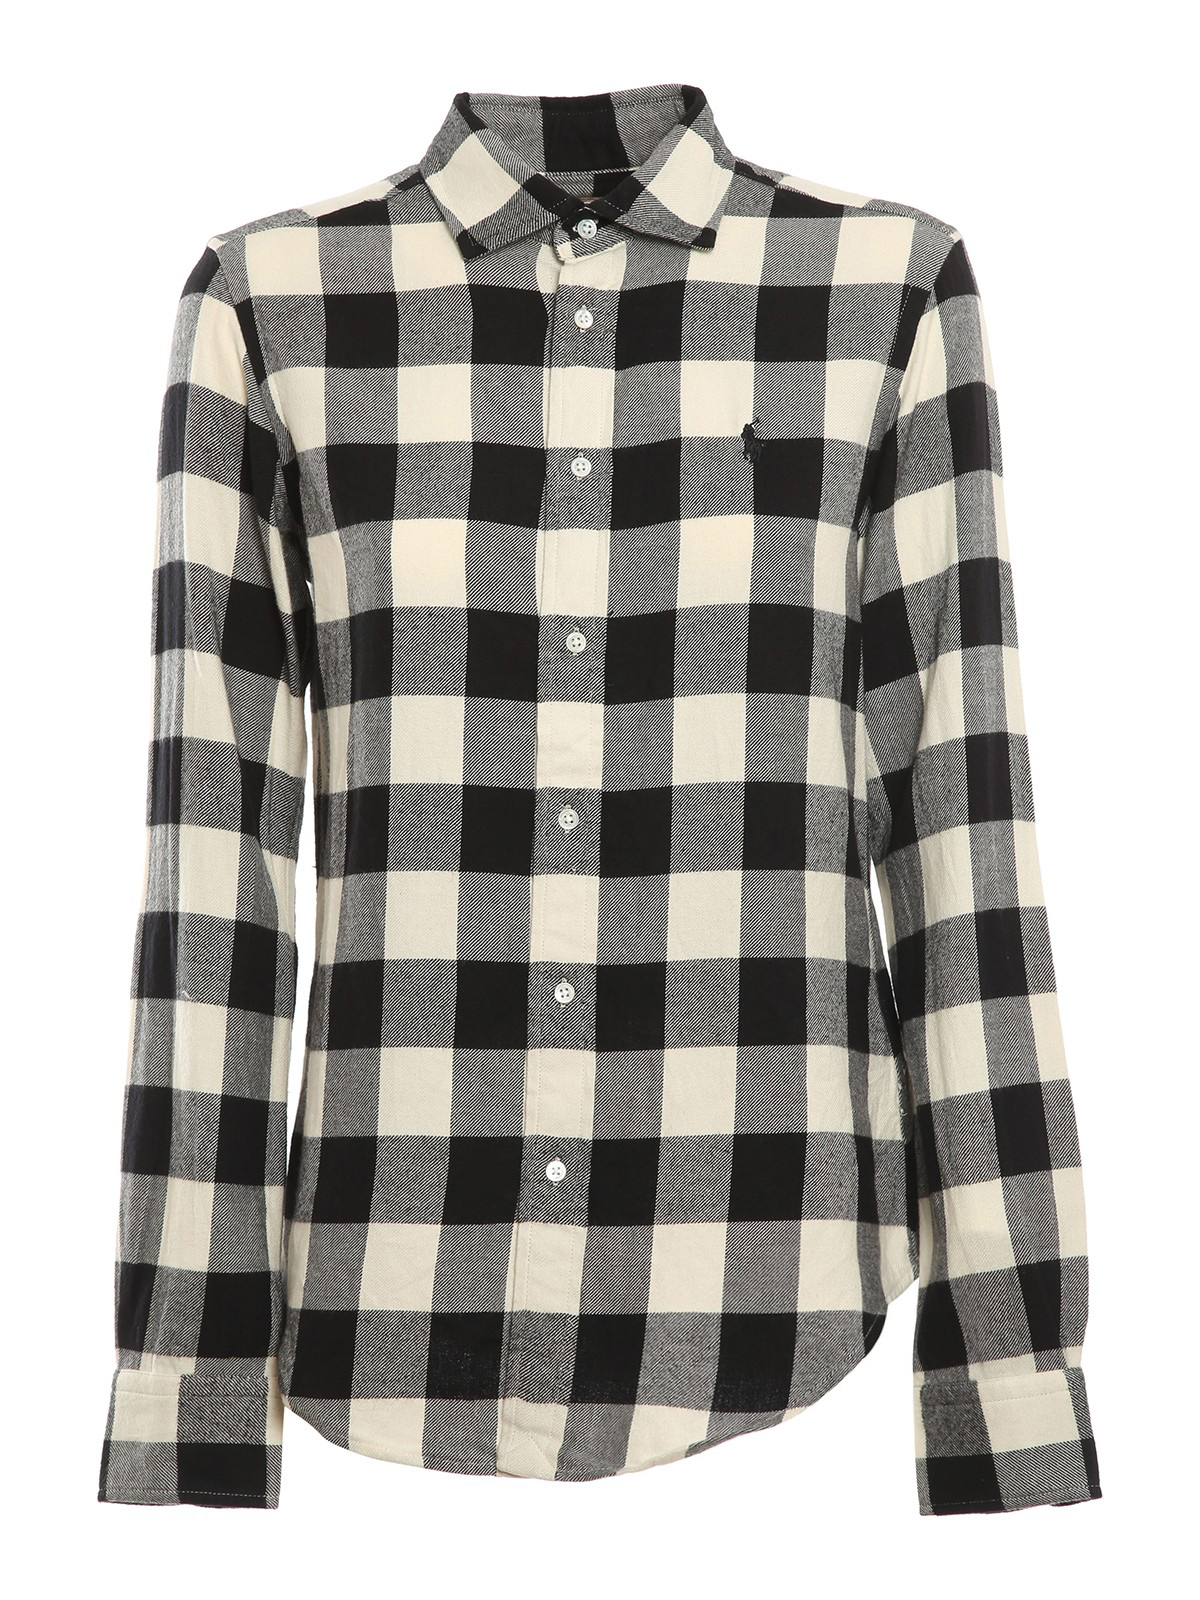 Shirts Polo Ralph Lauren - Checked shirt - 211850401001 | iKRIX.com